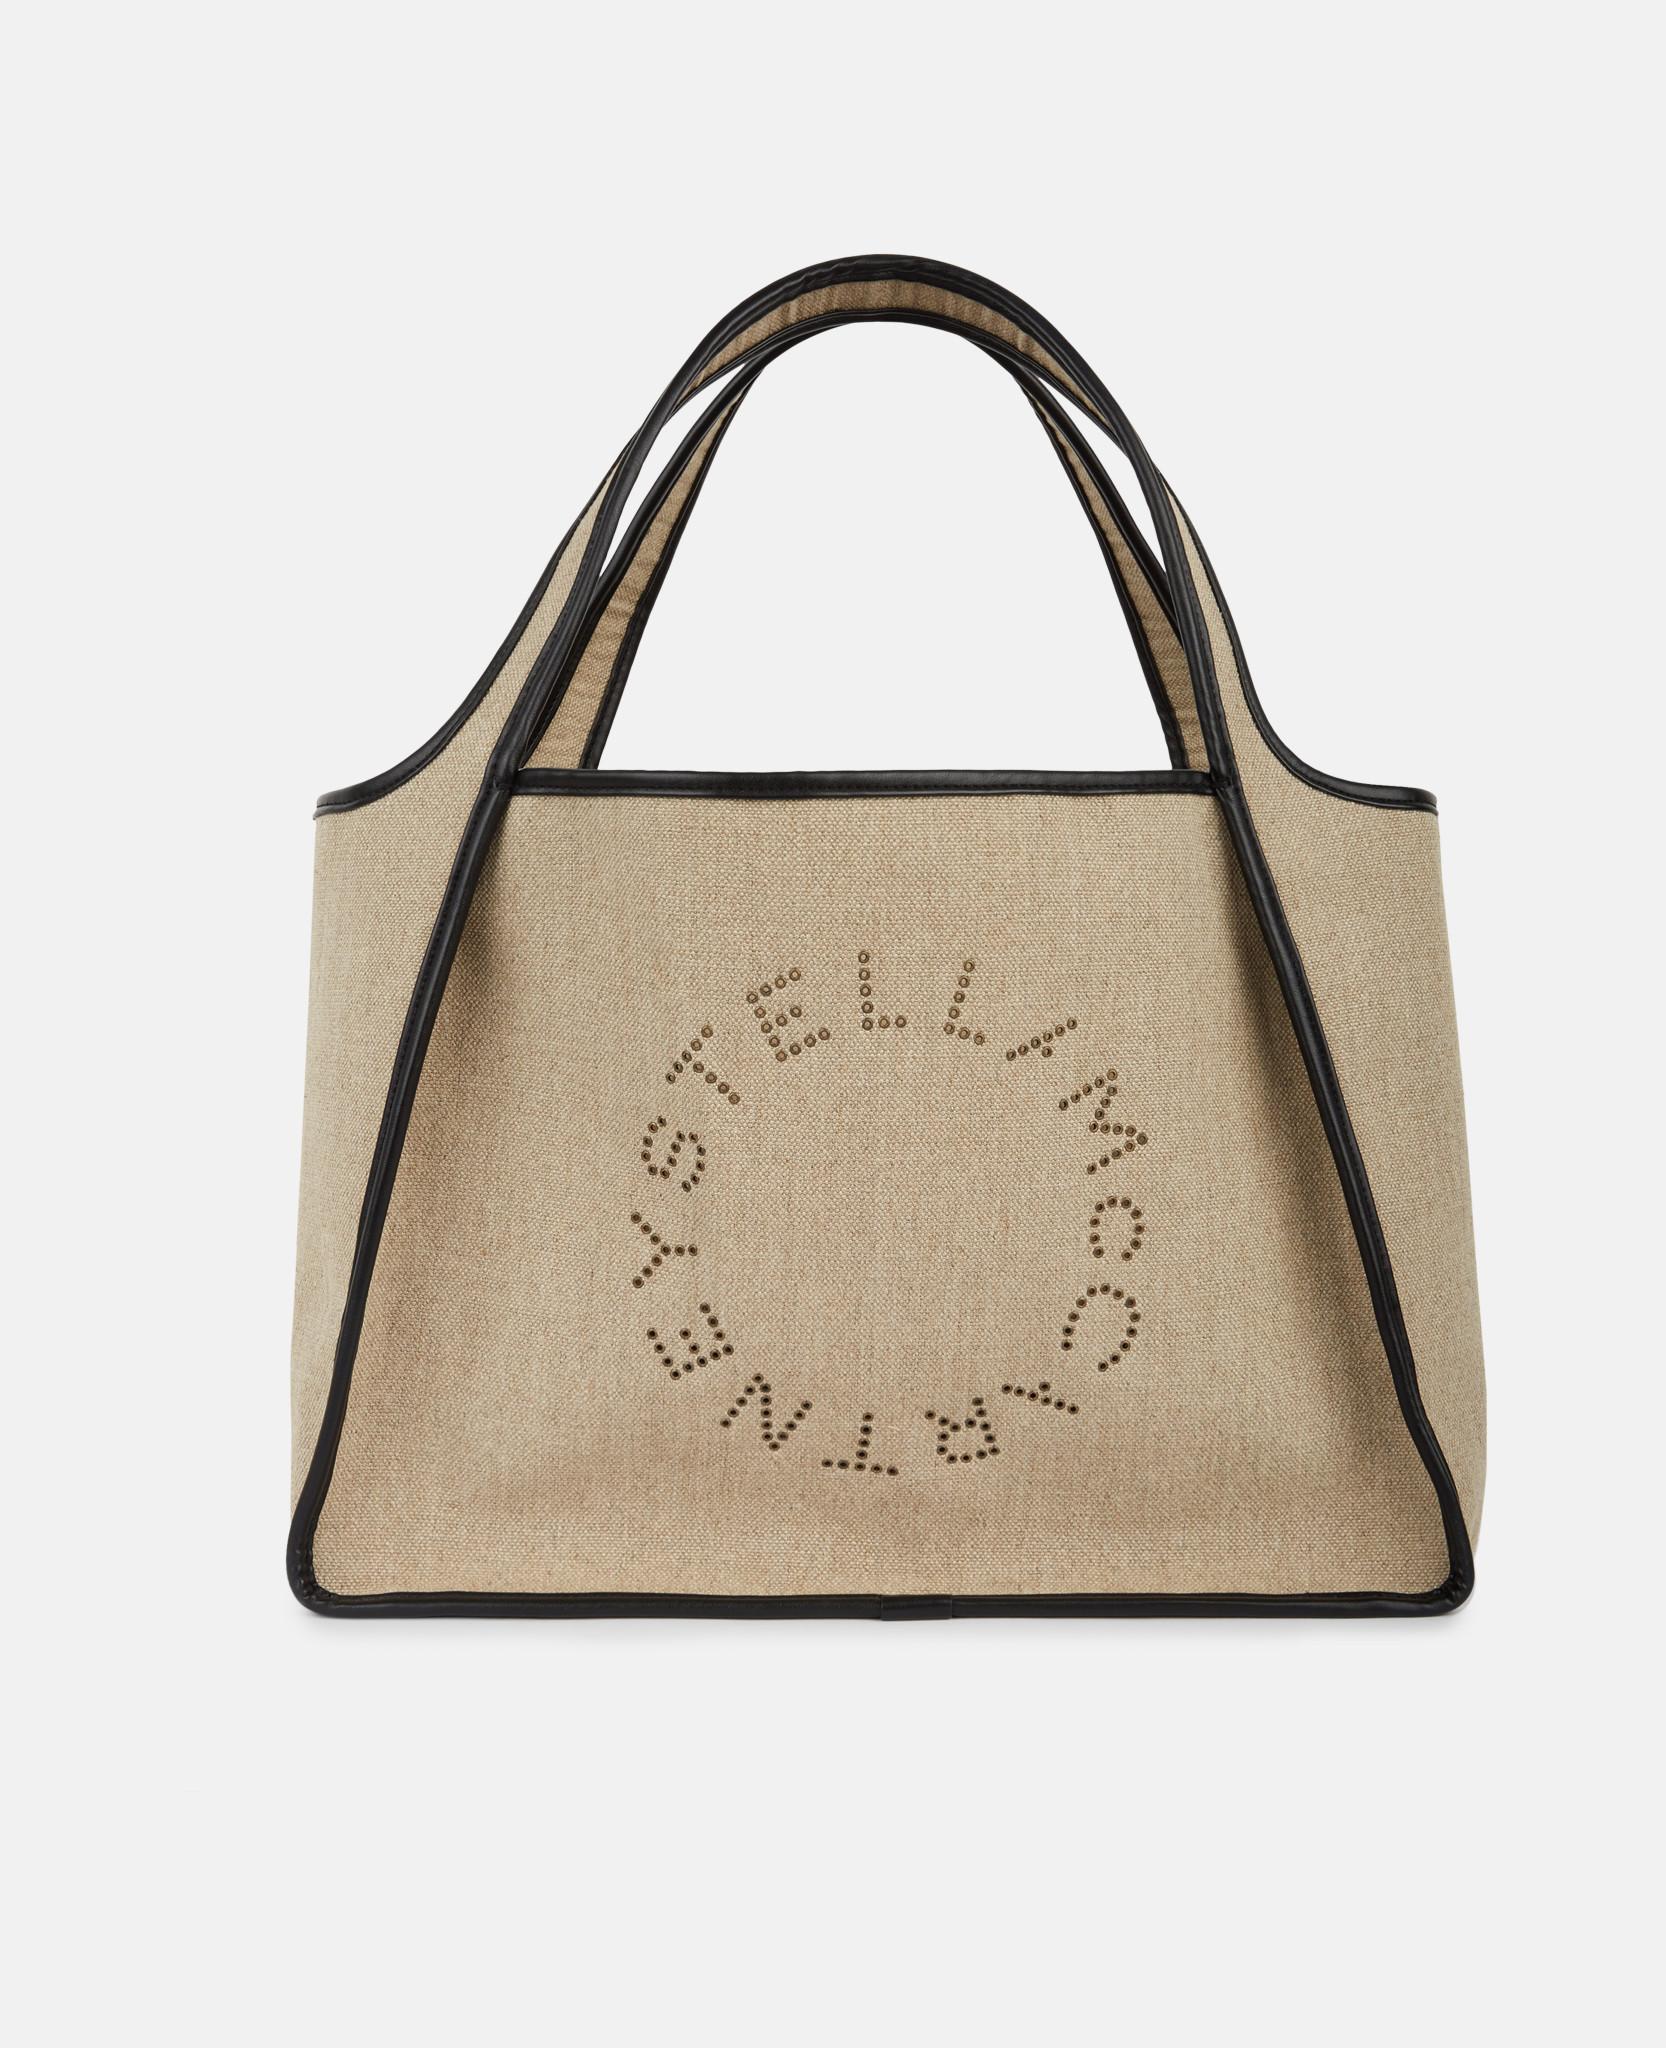 Stella McCartney Canvas Stella Logo Tote Bag in Beige (Natural) - Lyst